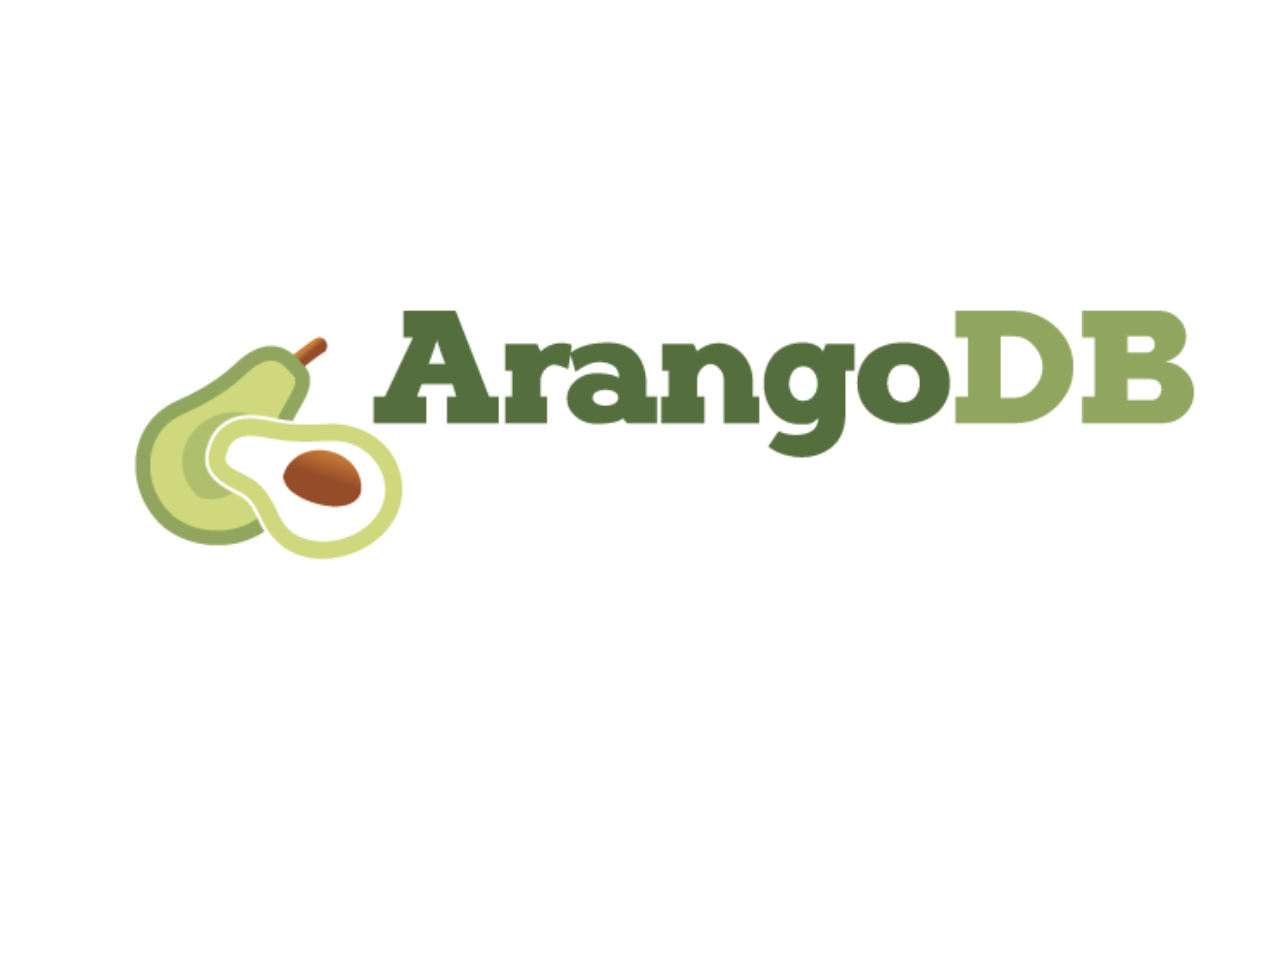 arangodb review